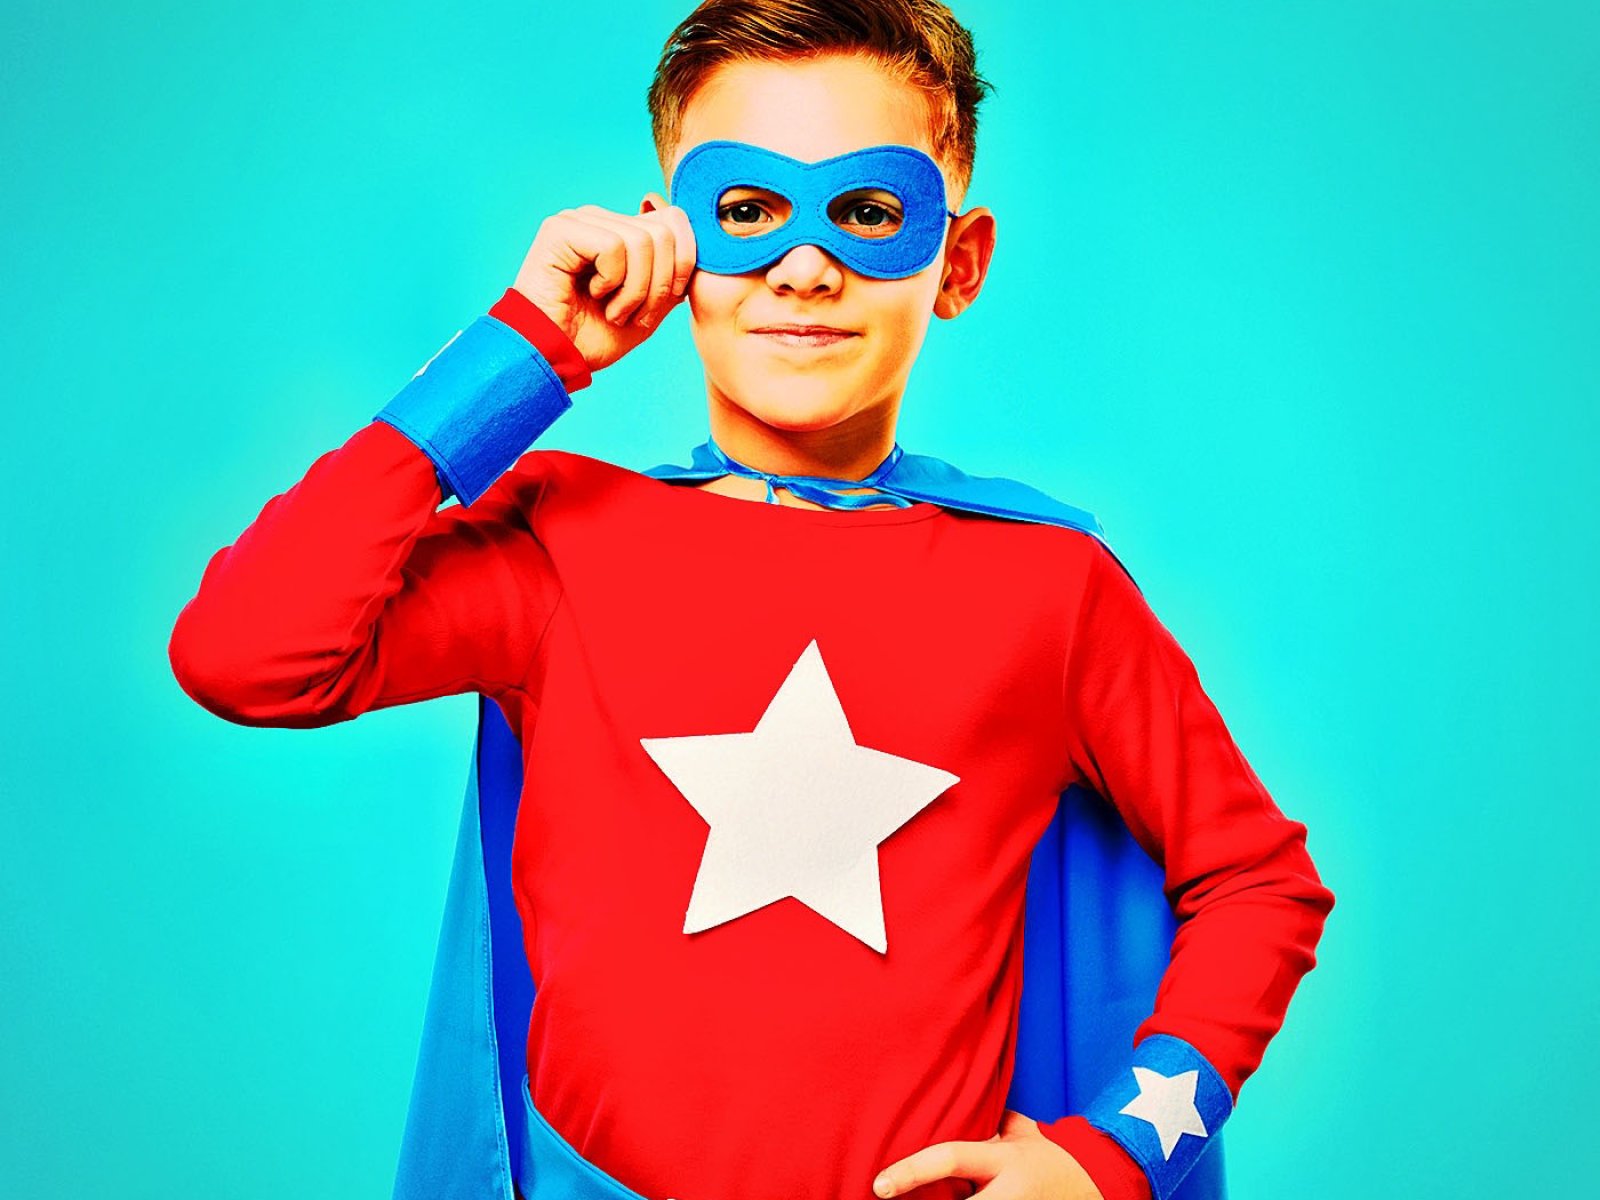 Brave boy in superhero costume